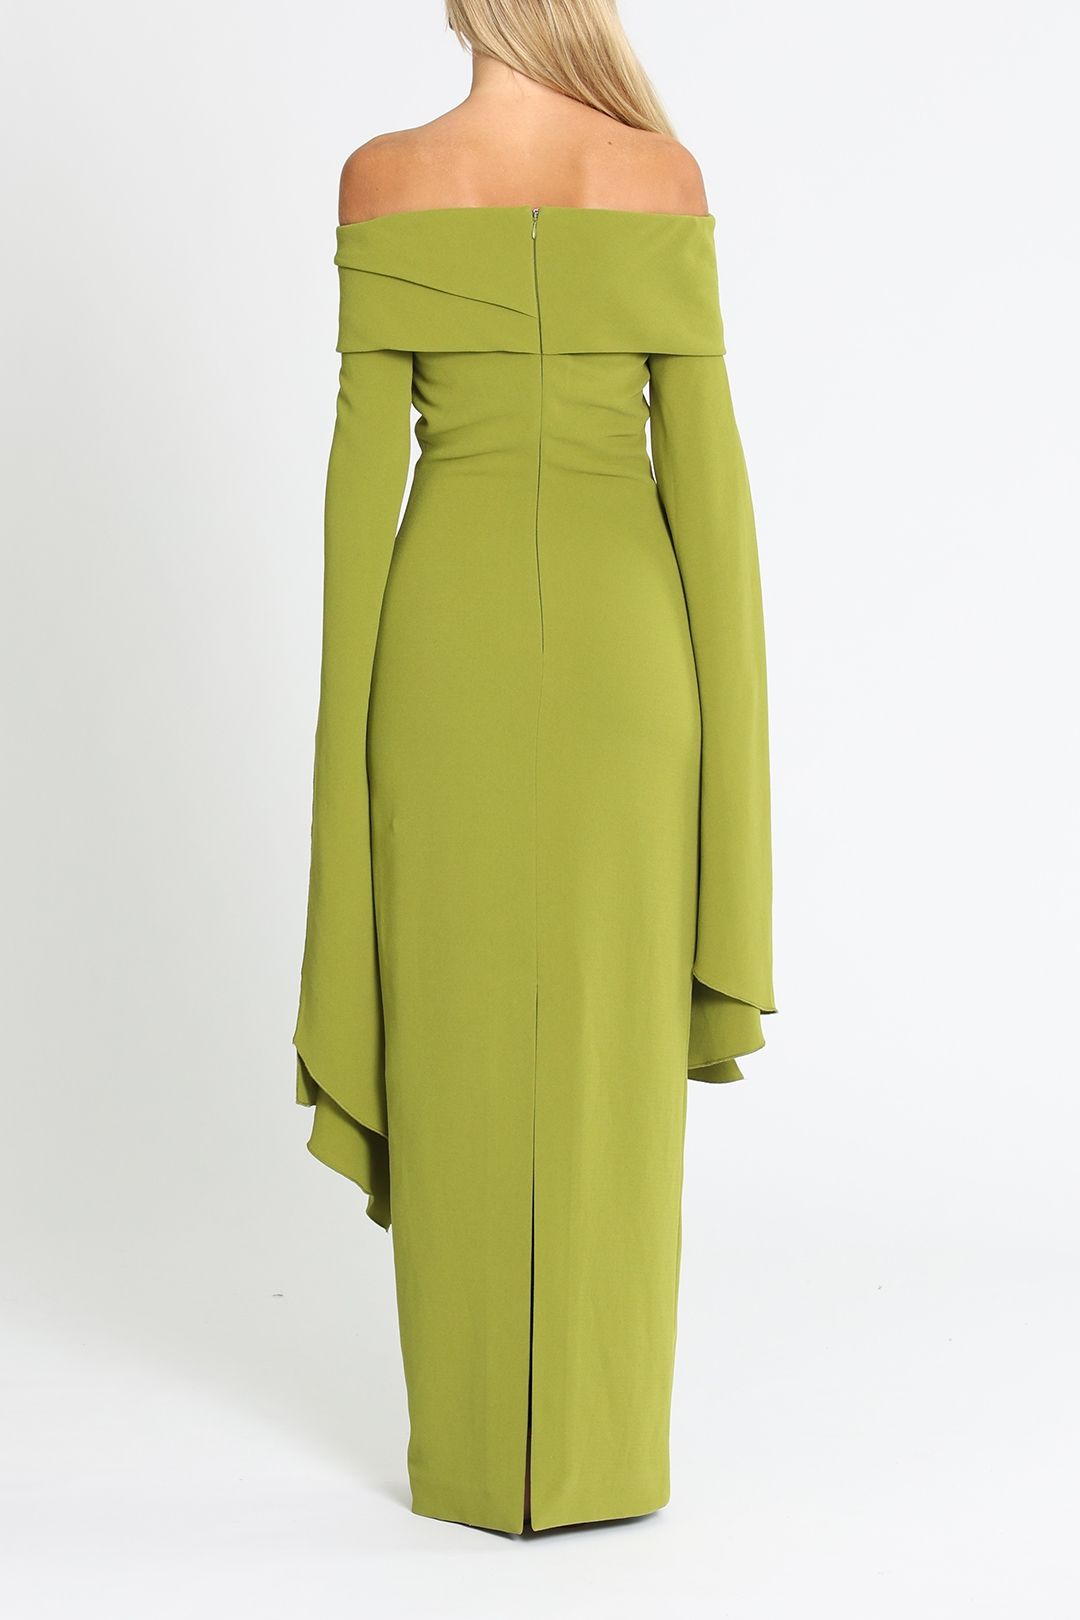 Solace London Arden Maxi Dress Asymmetric